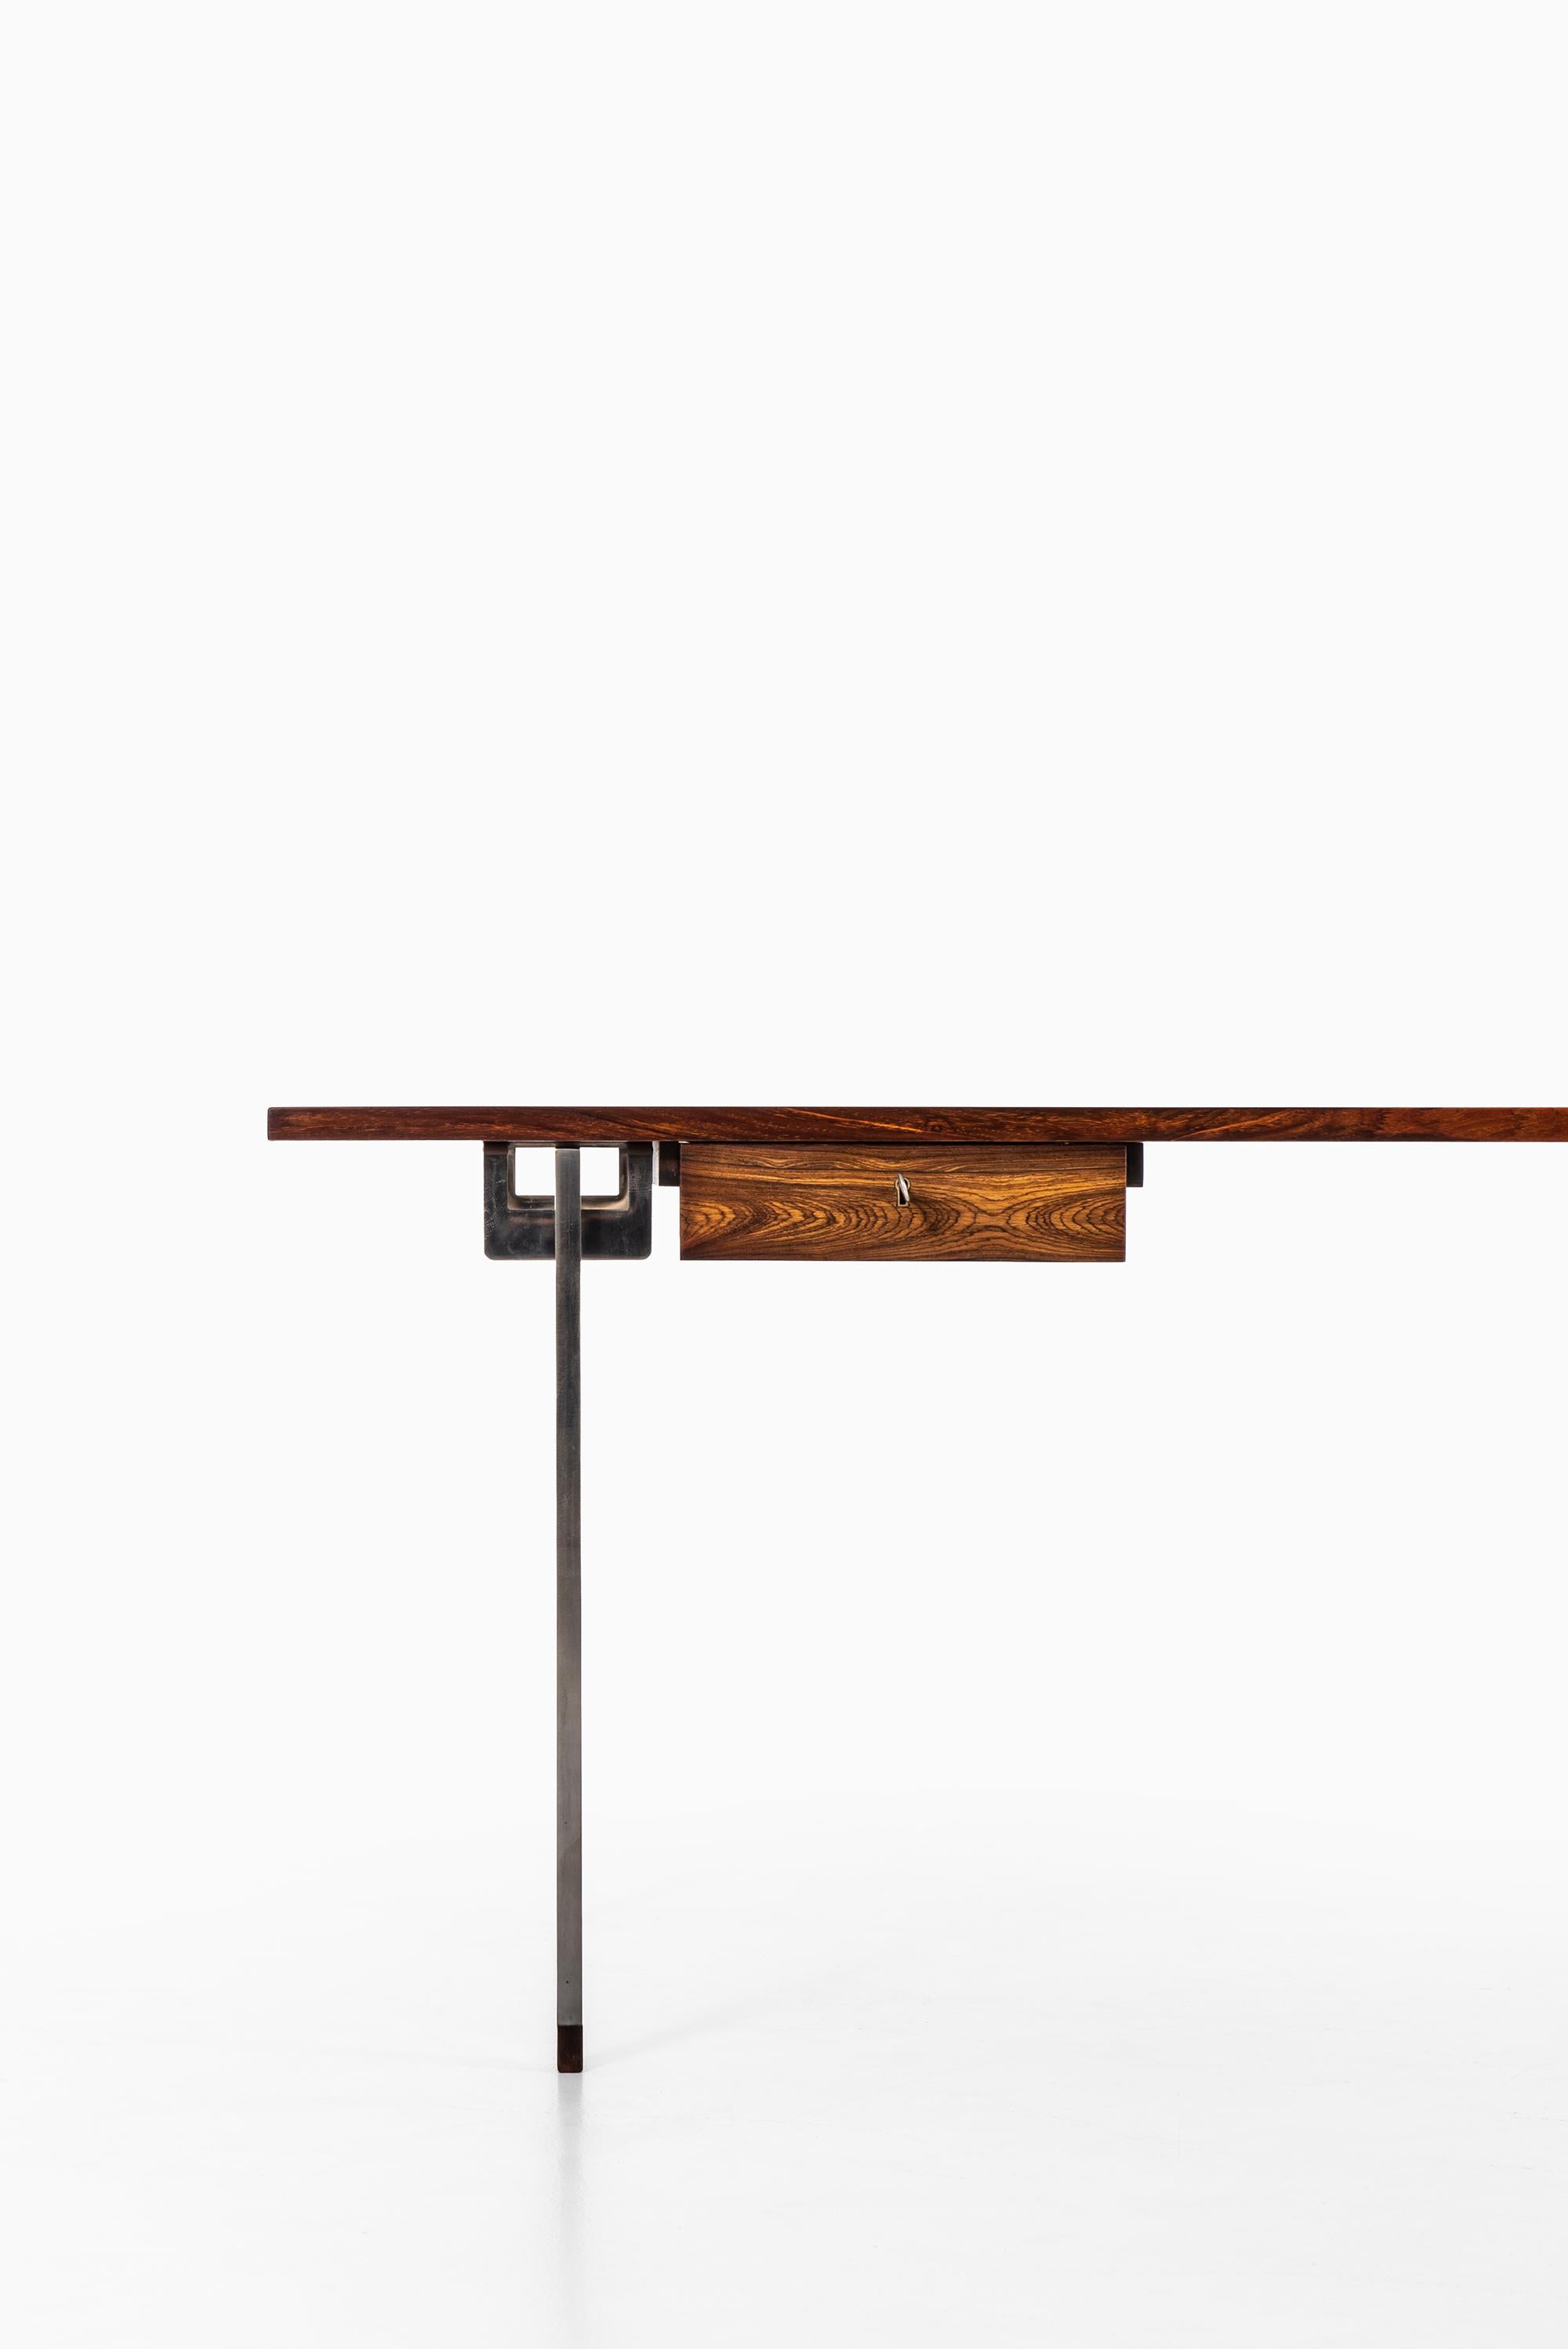 Very rare freestanding desk model AT-325 designed by Hans Wegner. Produced by Andreas Tuck in Denmark.